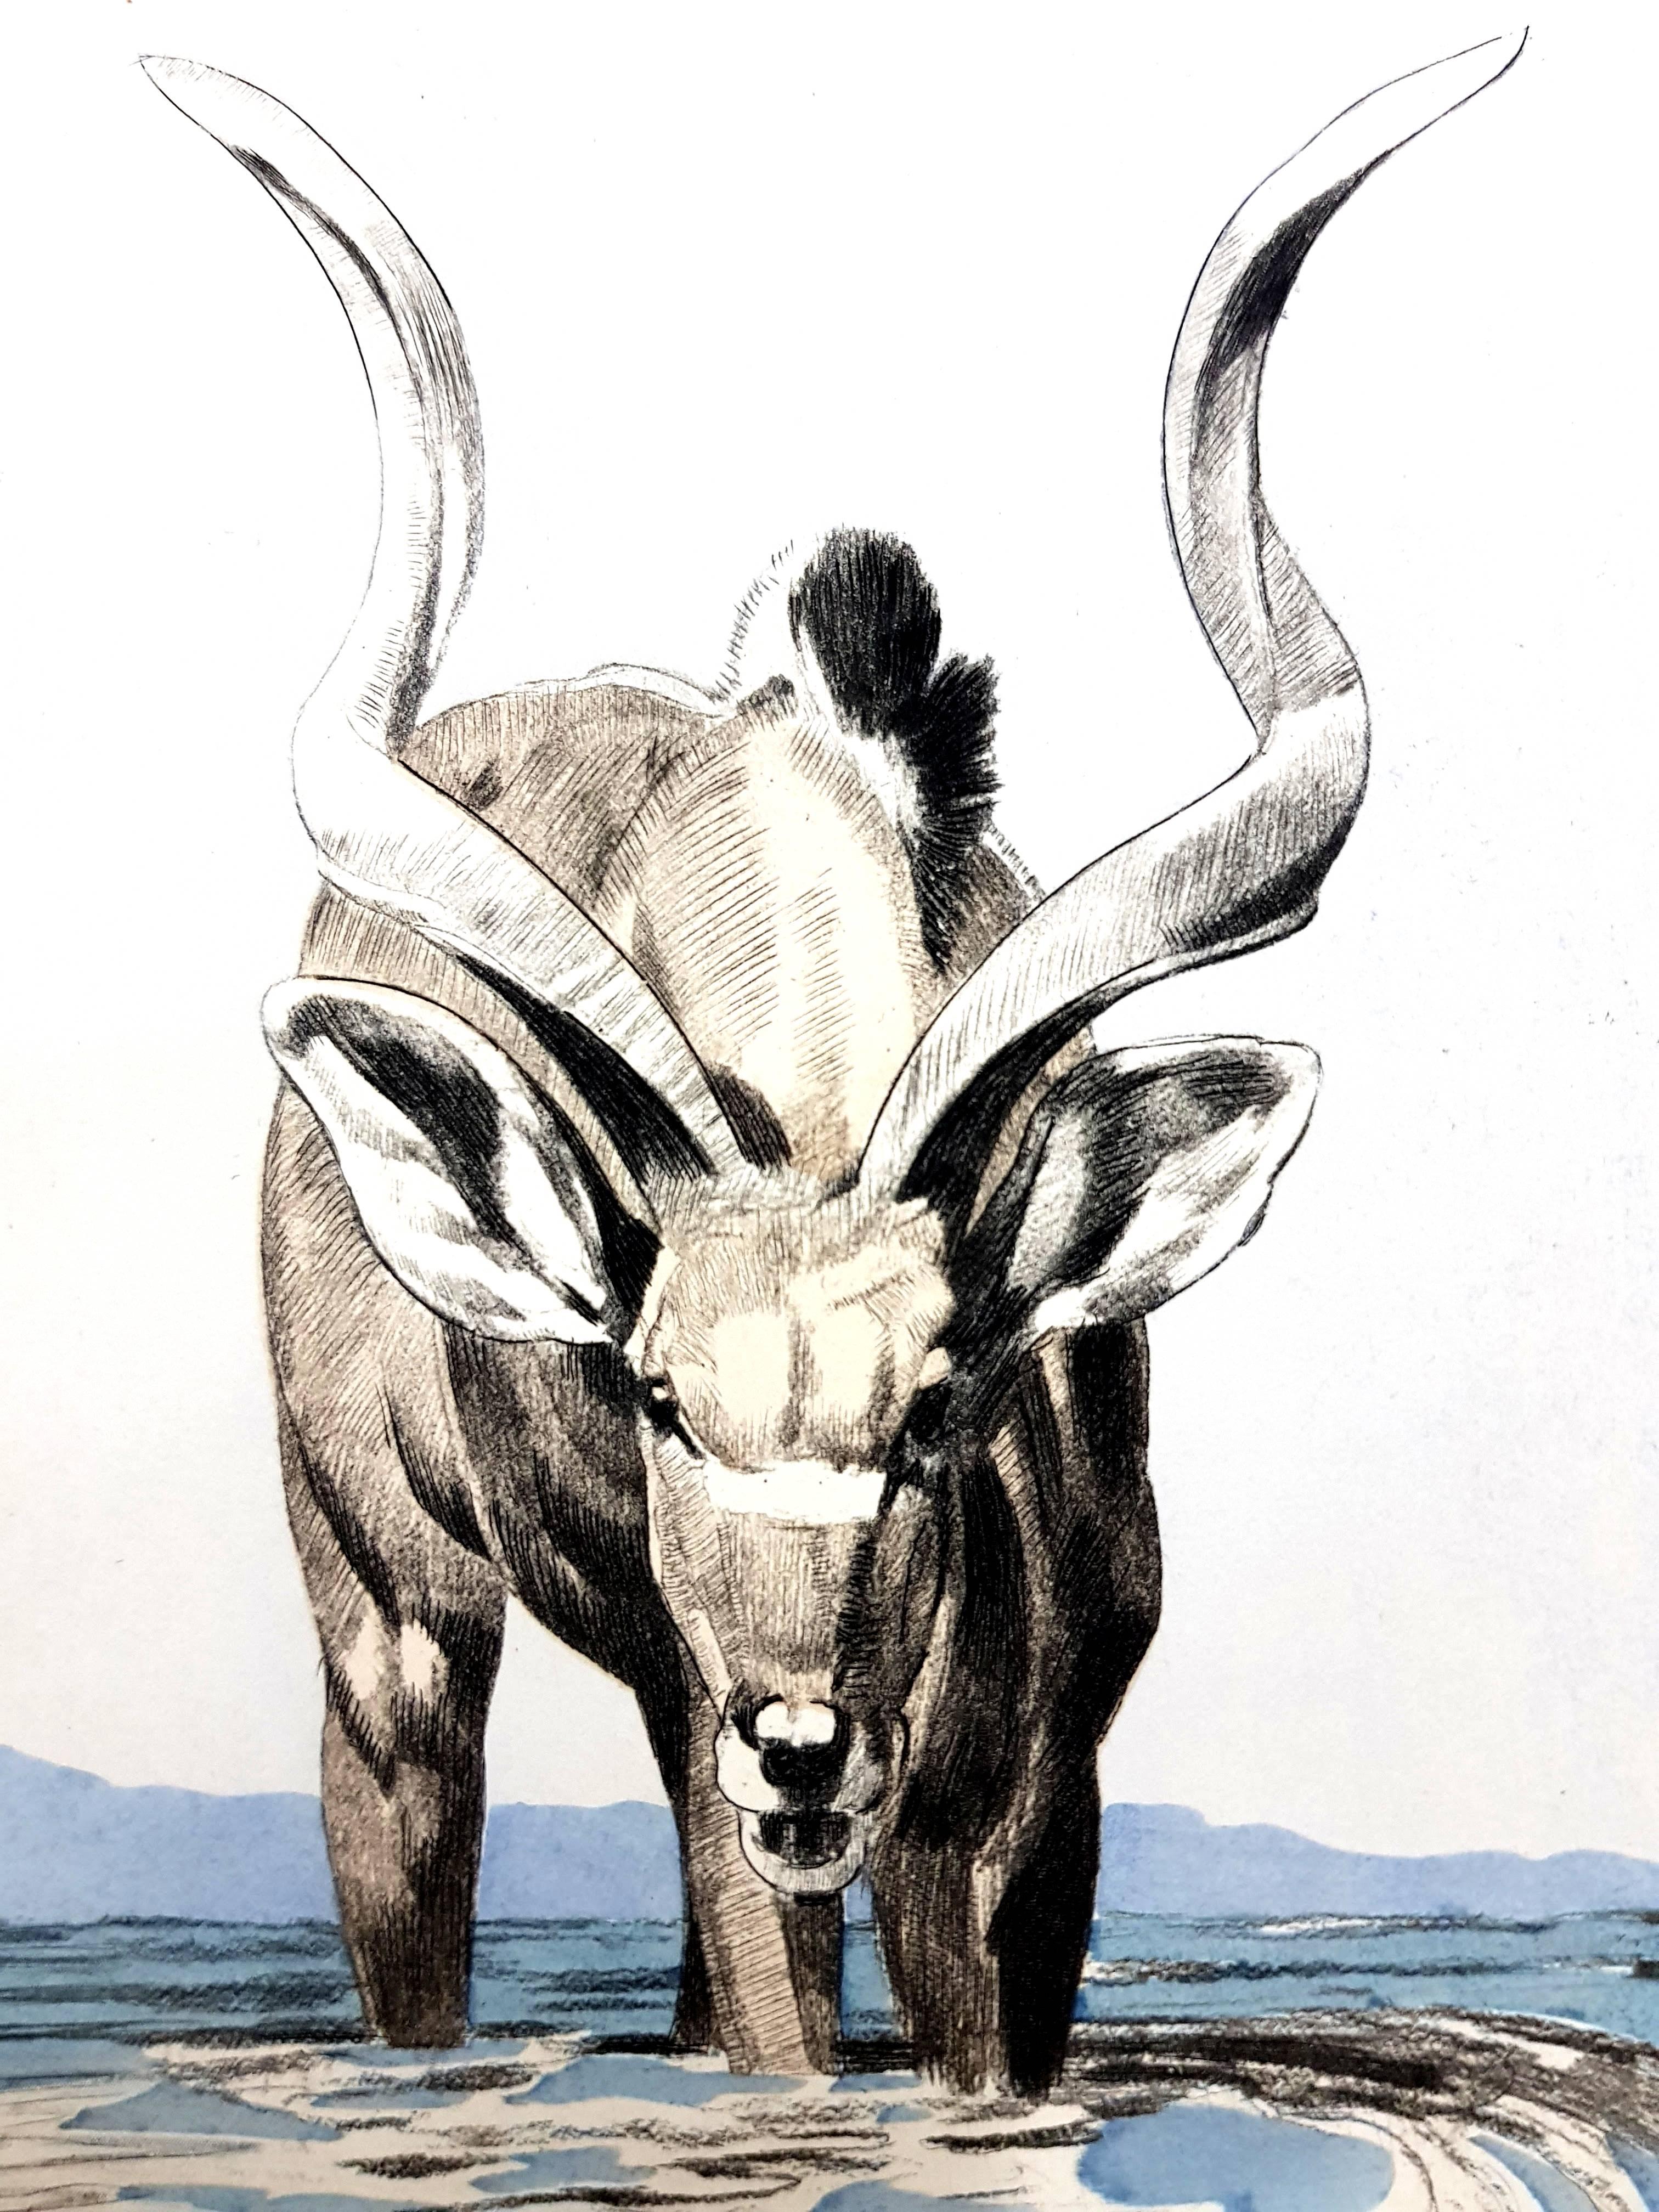 Paul Jouve (after) - Antelope - Engraving - Modern Print by Pierre-Paul Jouve